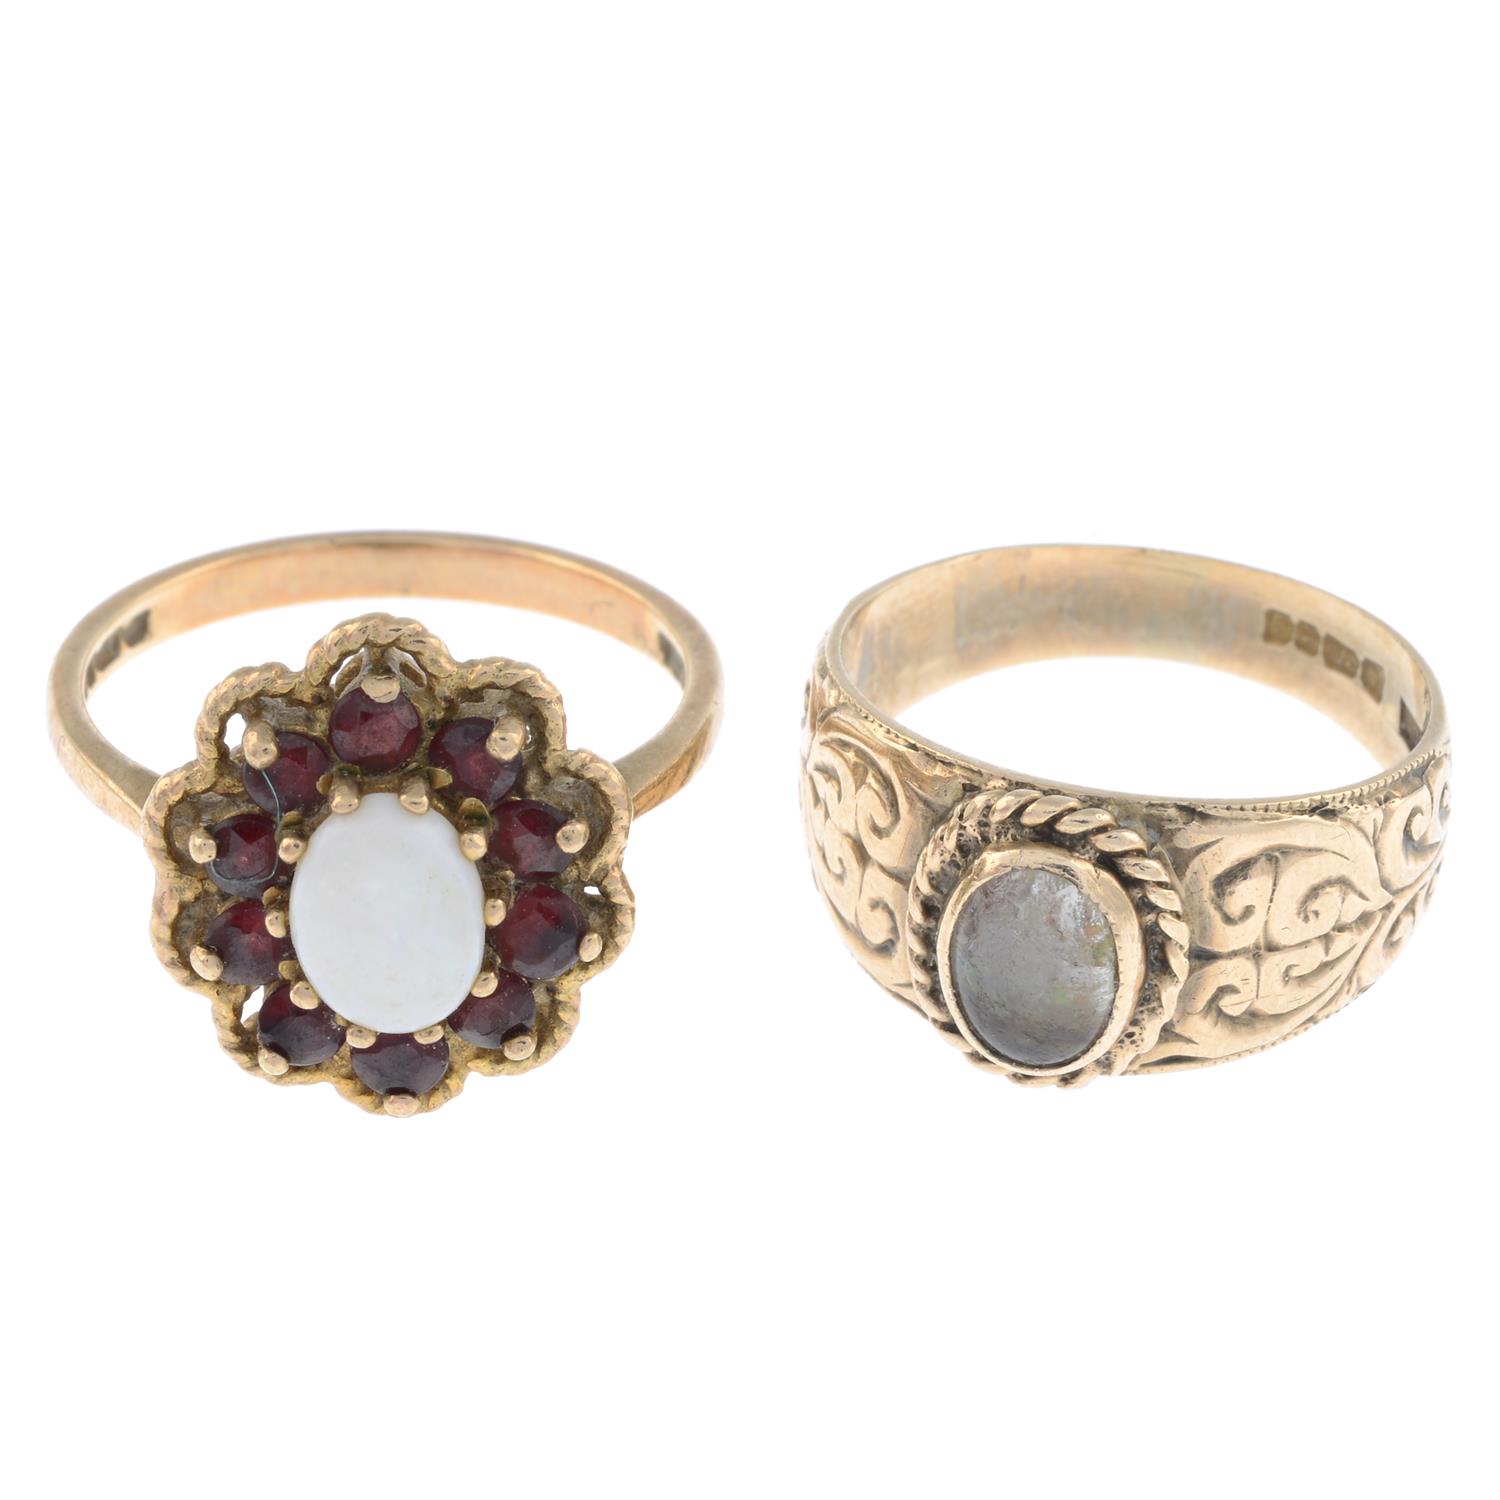 Two 9ct gold gem-set dress rings